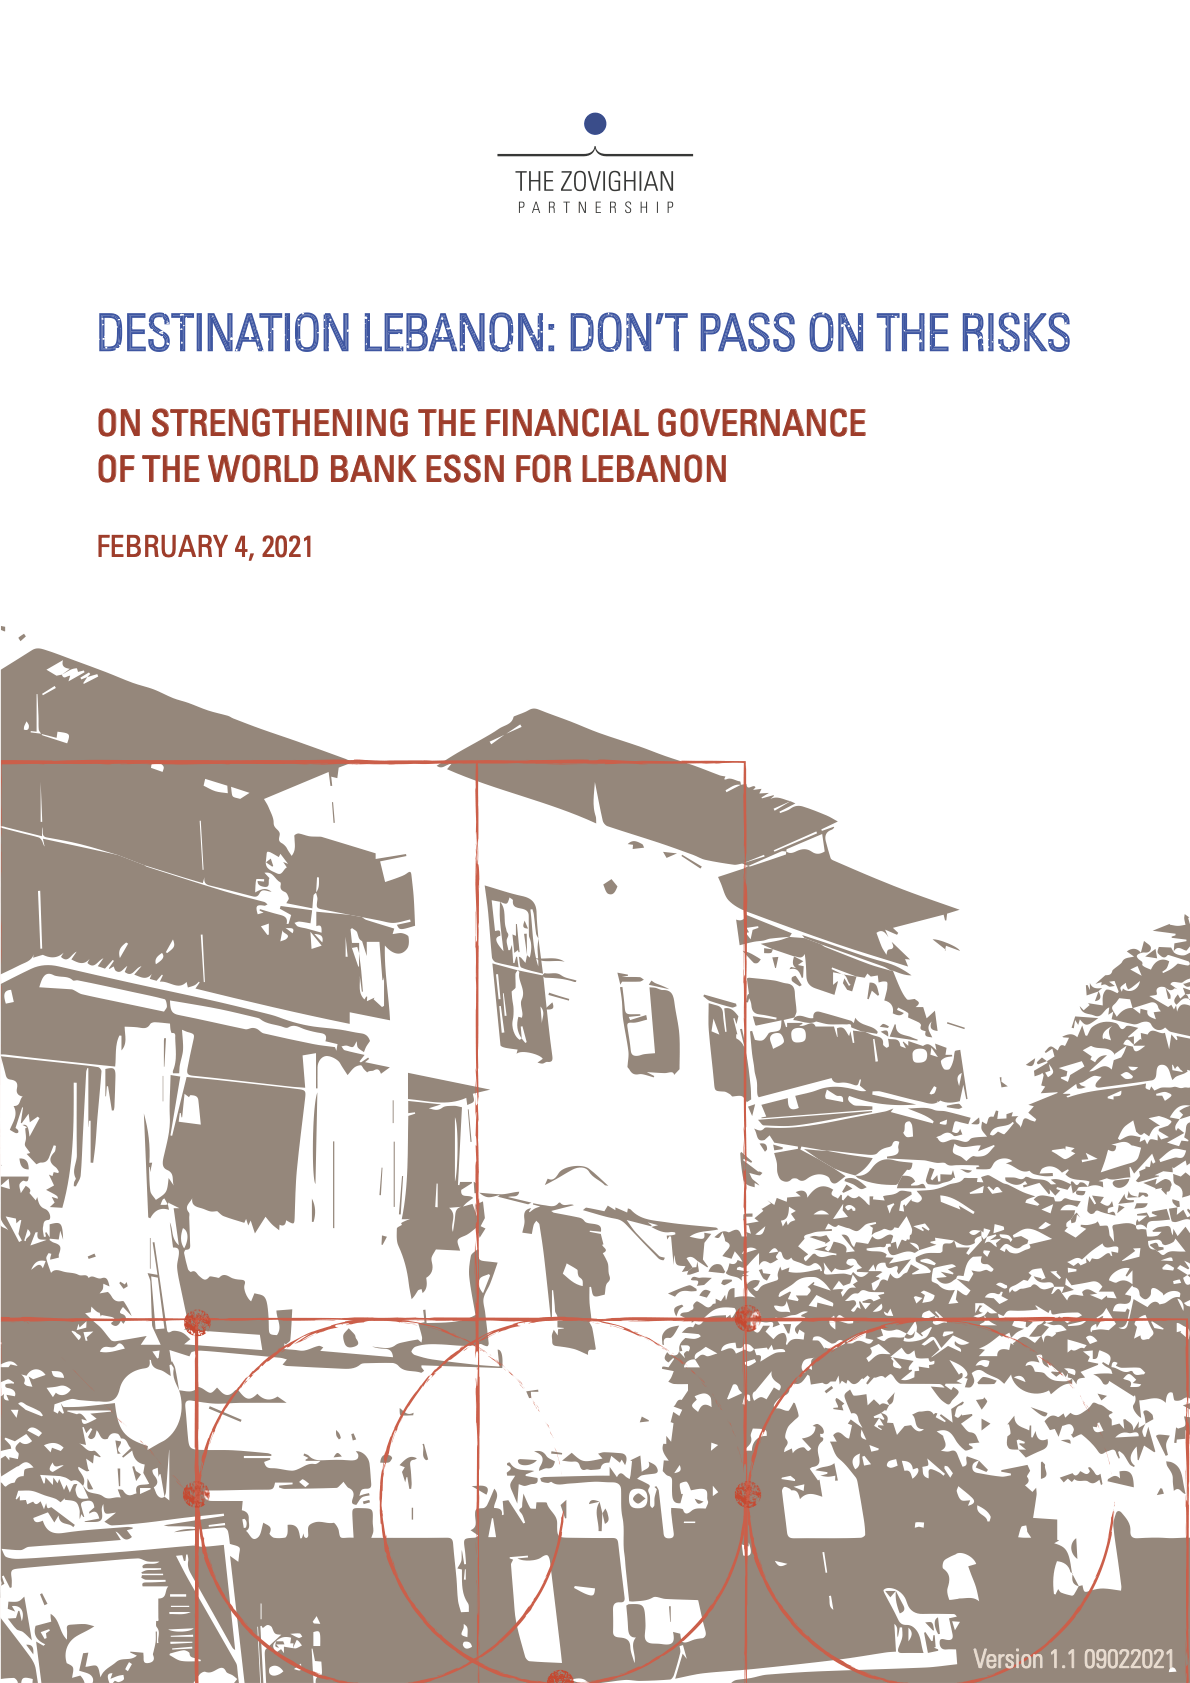 Cover screenshot of publication on financial governance for Lebanon